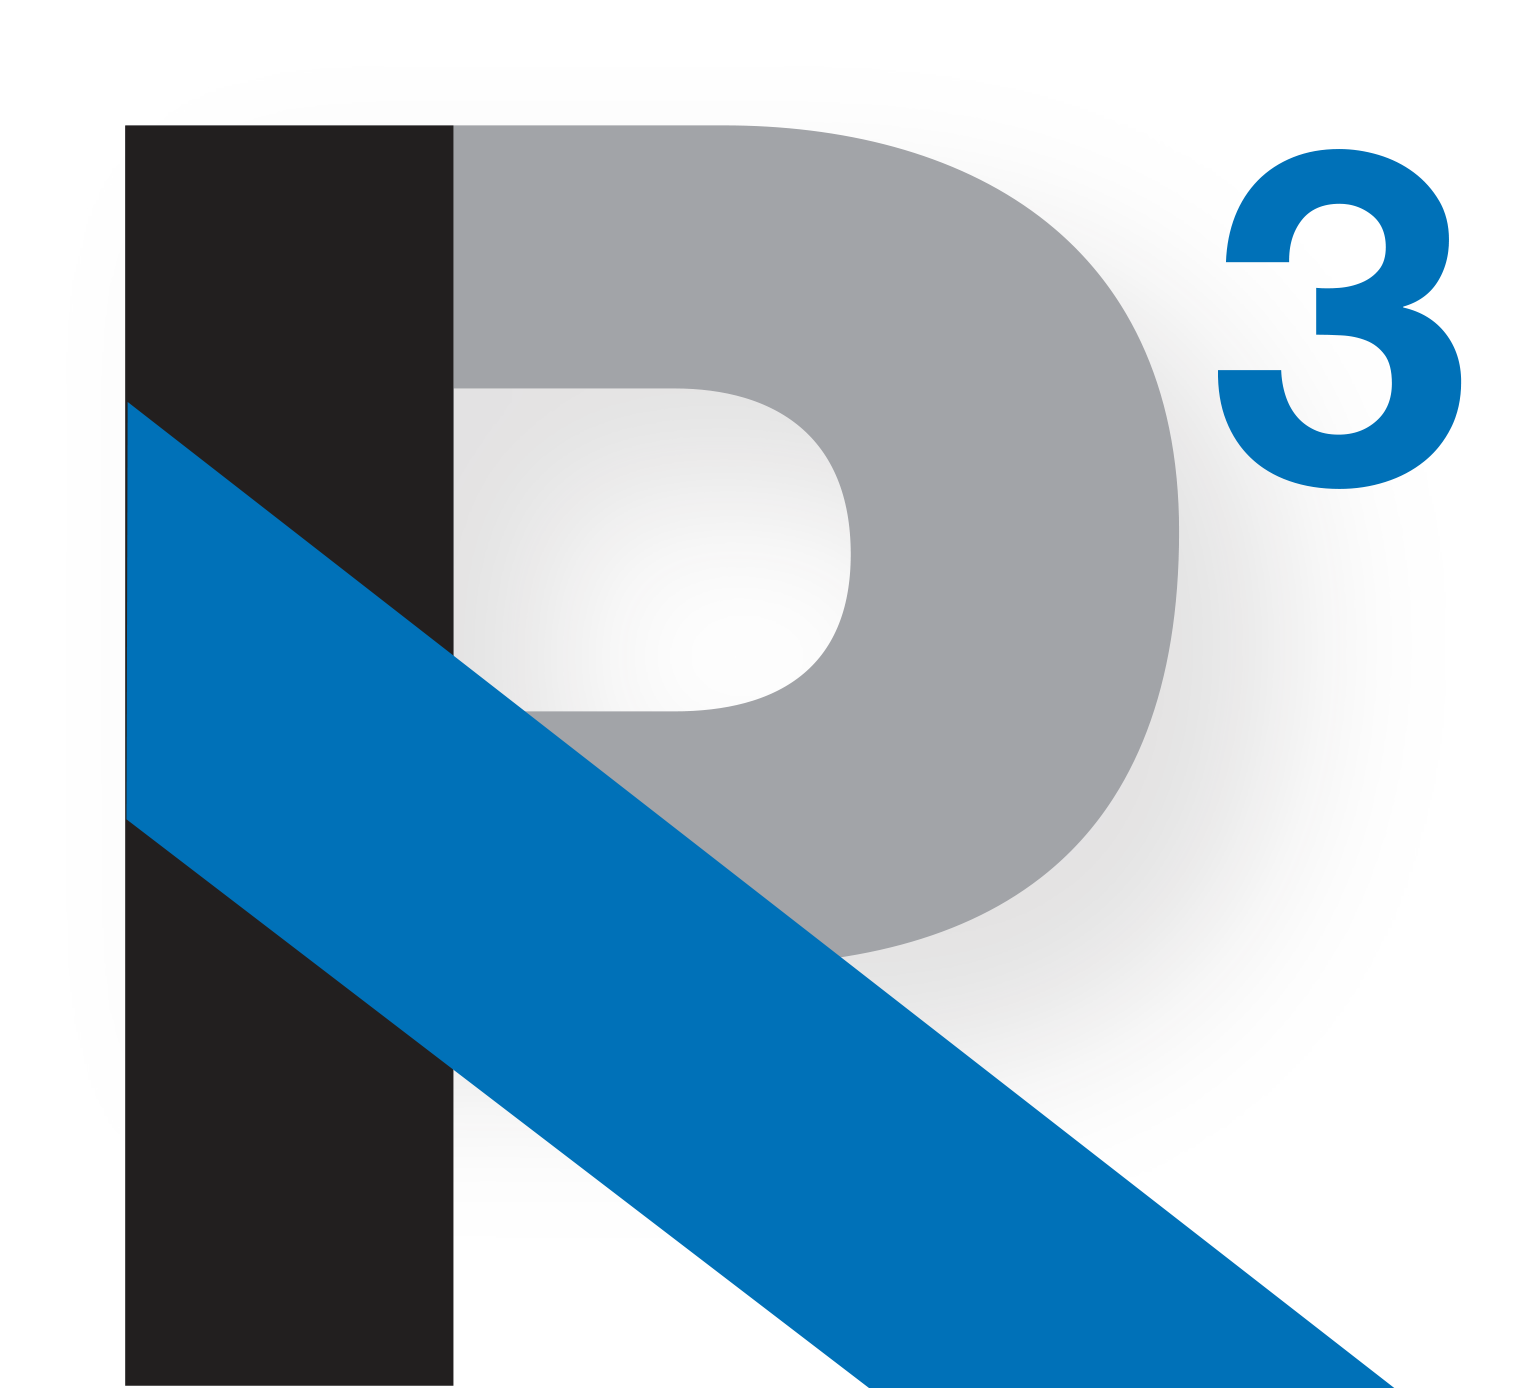 r3 logo g